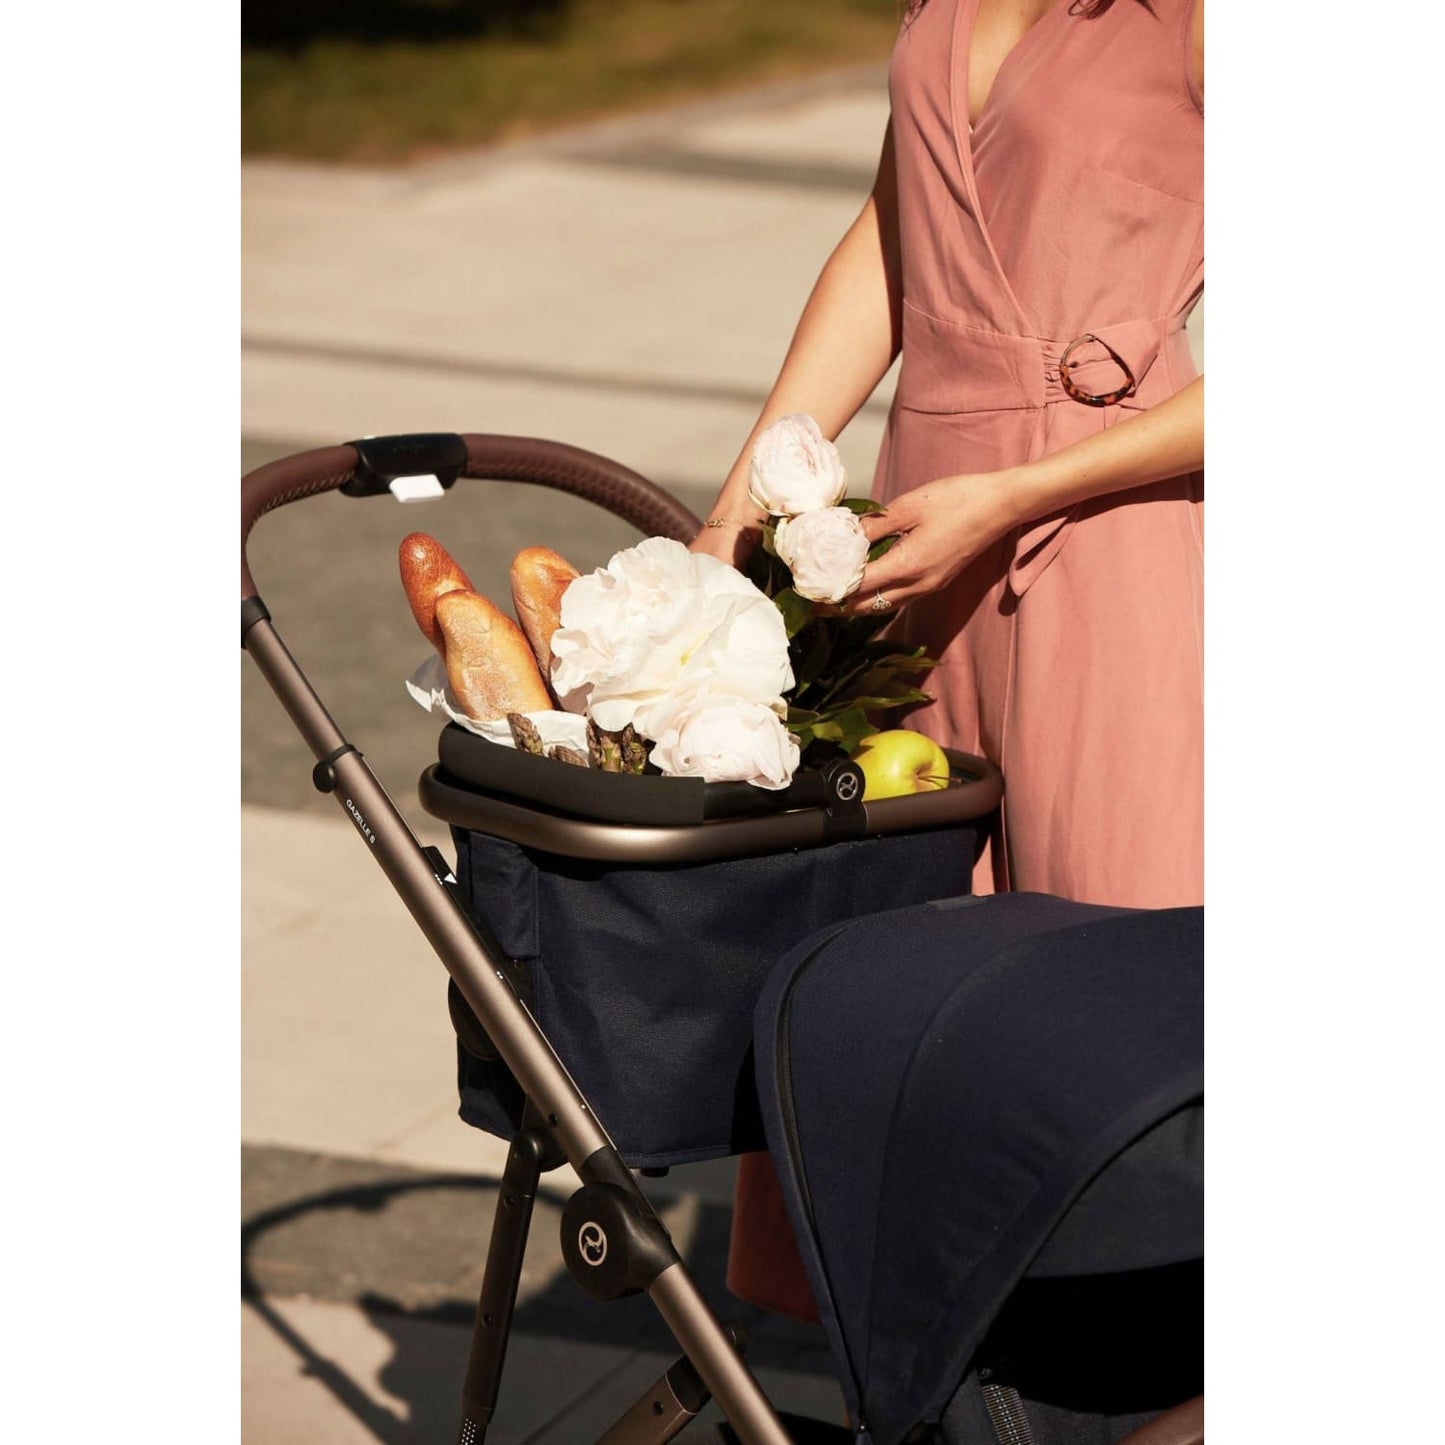 CYBEX Gazelle S City Shopper Complete Infant Baby Stroller -